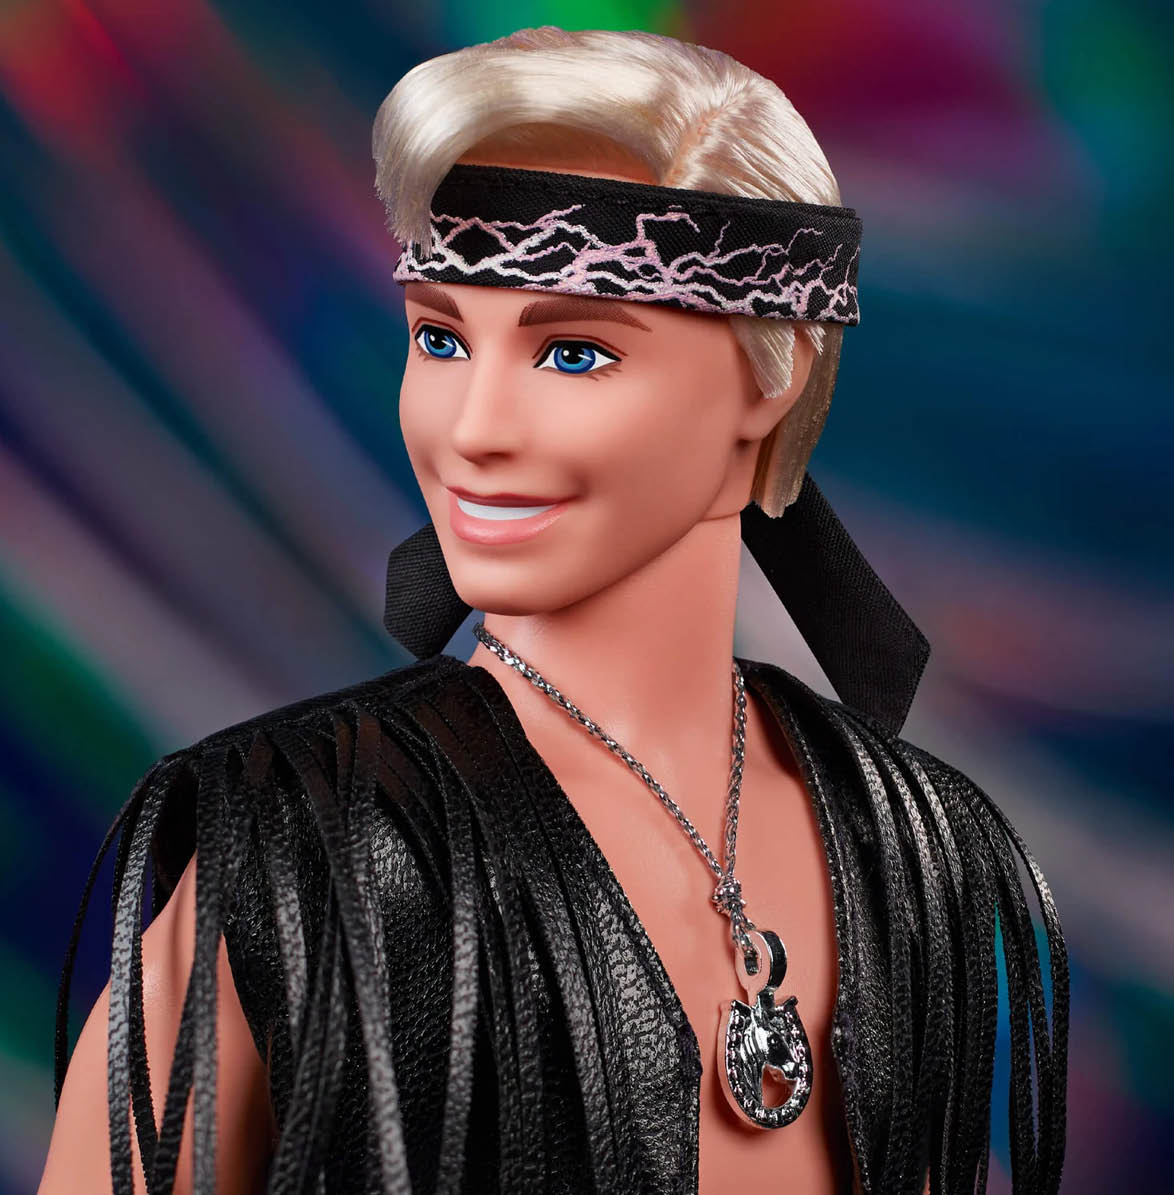 Ken Doll In Faux Fur Coat And Black Fringe Vest – Barbie The Movie head shot on coloured background